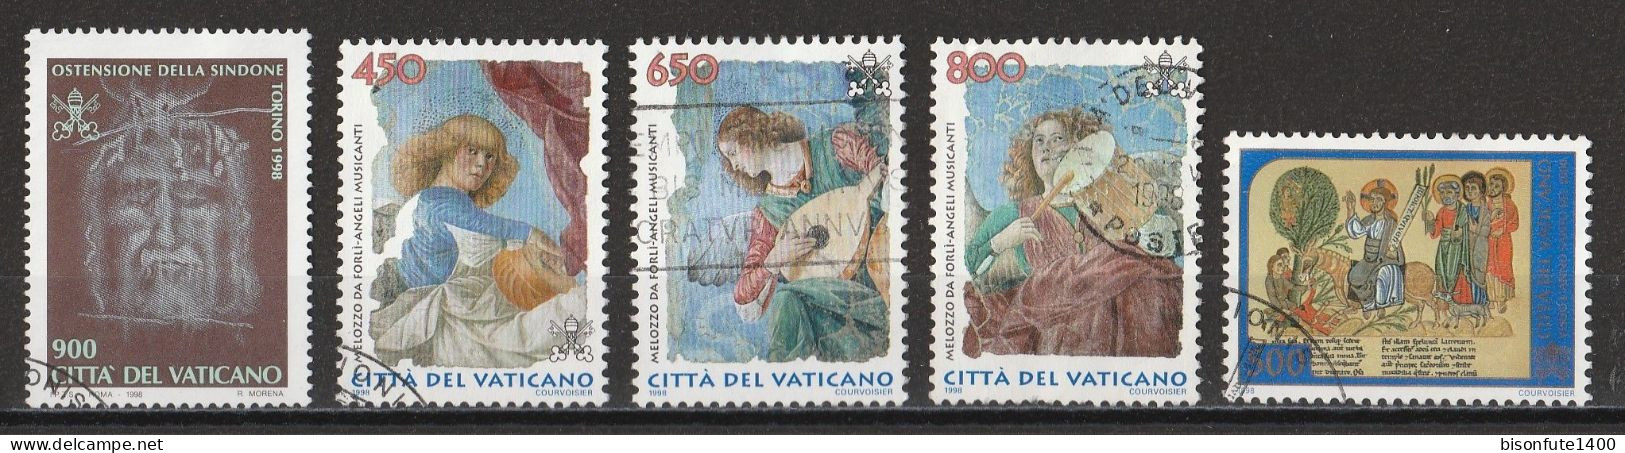 Vatican 1998 : Timbres Yvert & Tellier N° 1106 - 1108 - 1109 - 1110 - 1114 - 1115 - 1121 Et 1123 Oblitérés - Used Stamps